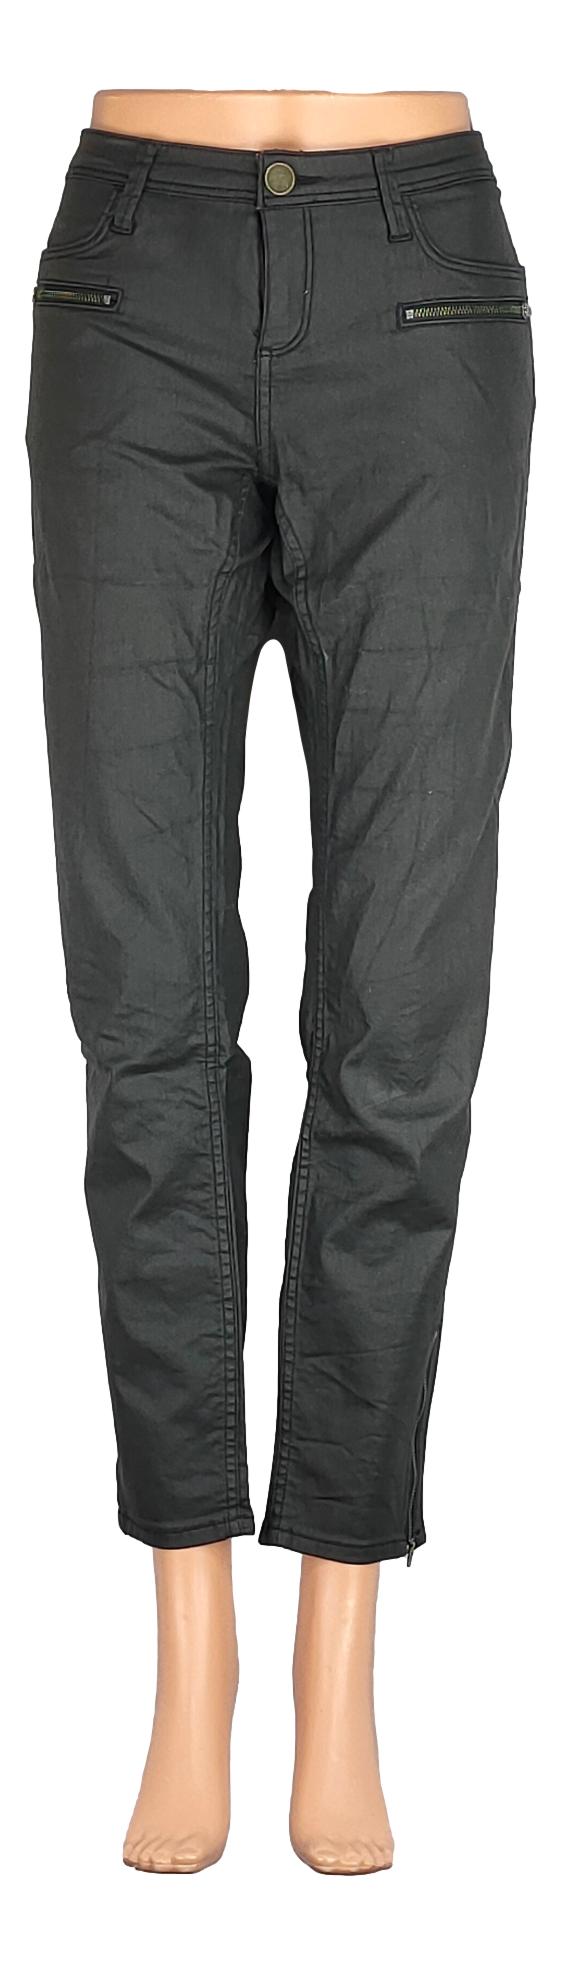 Pantalon Promod - taille 40